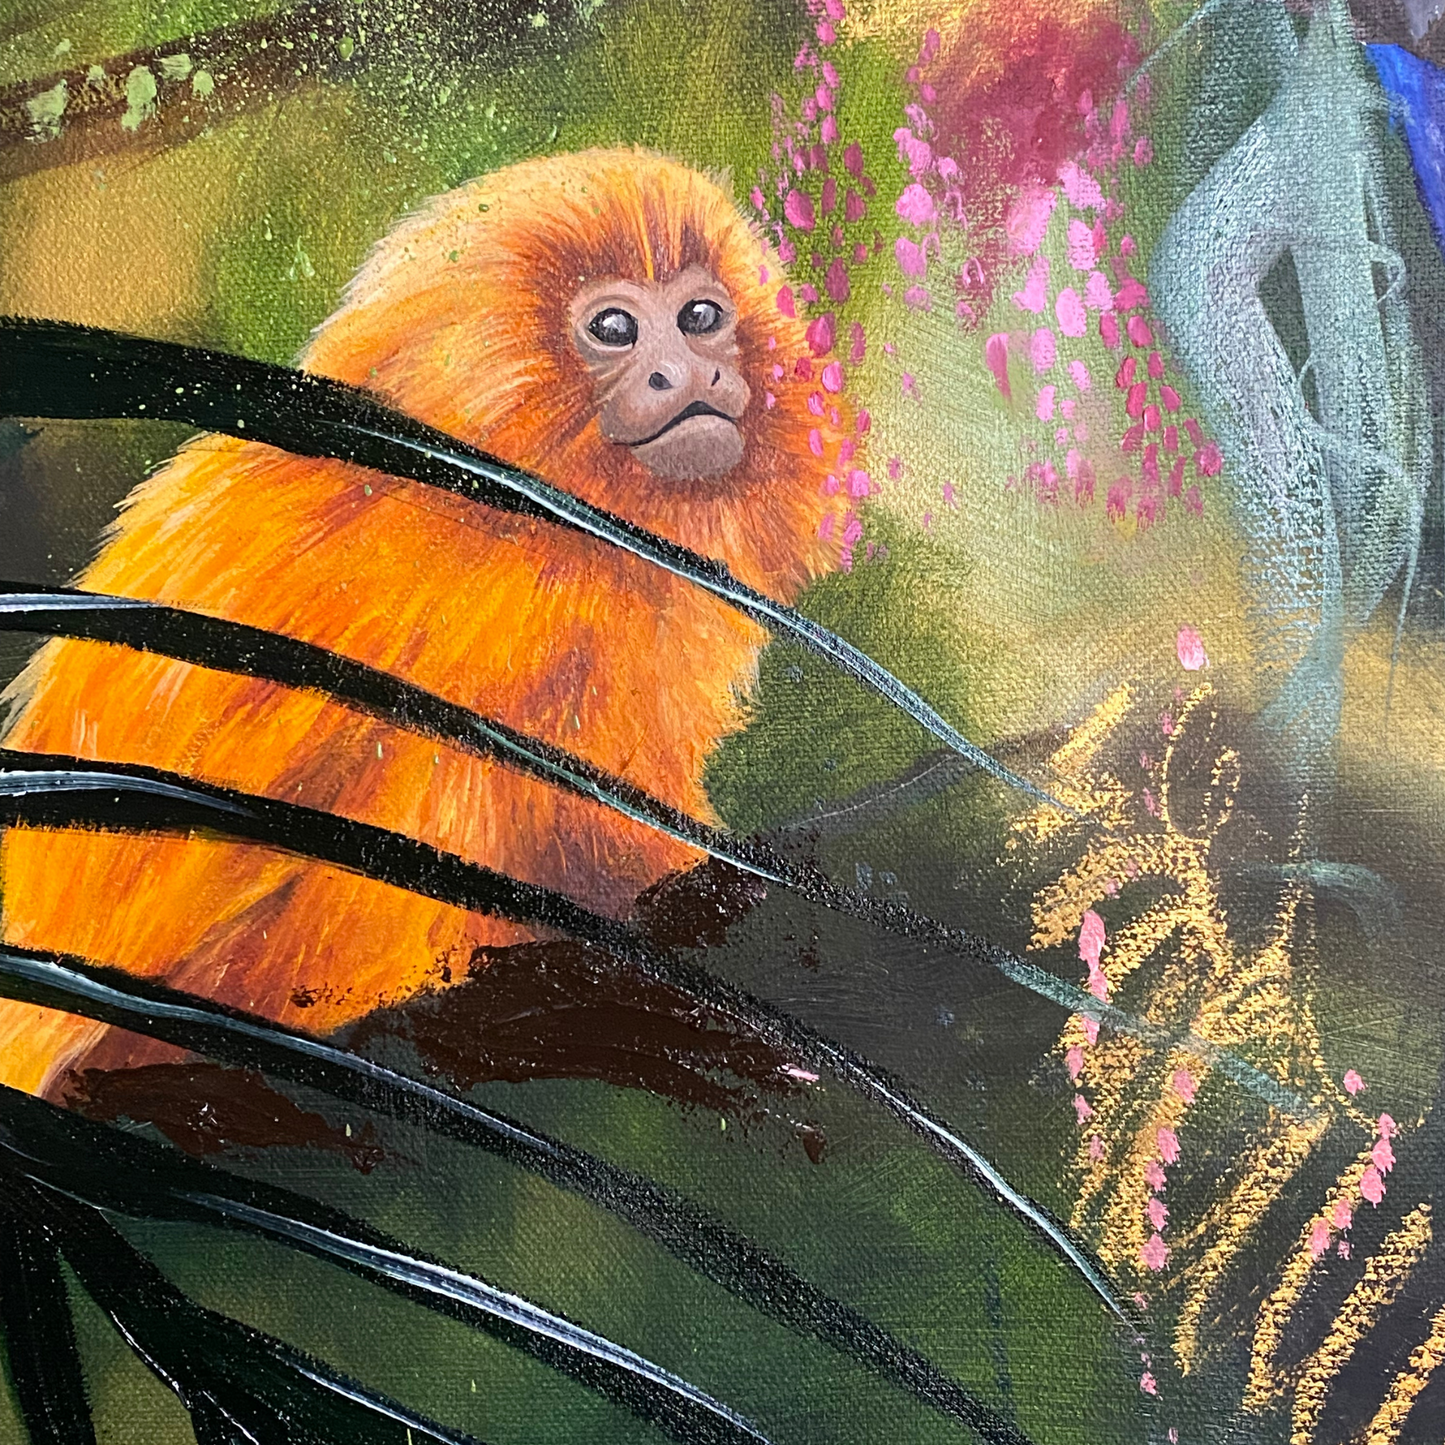 "So Long, Farewell" - oil painting of endangered wildlife of the rainforest